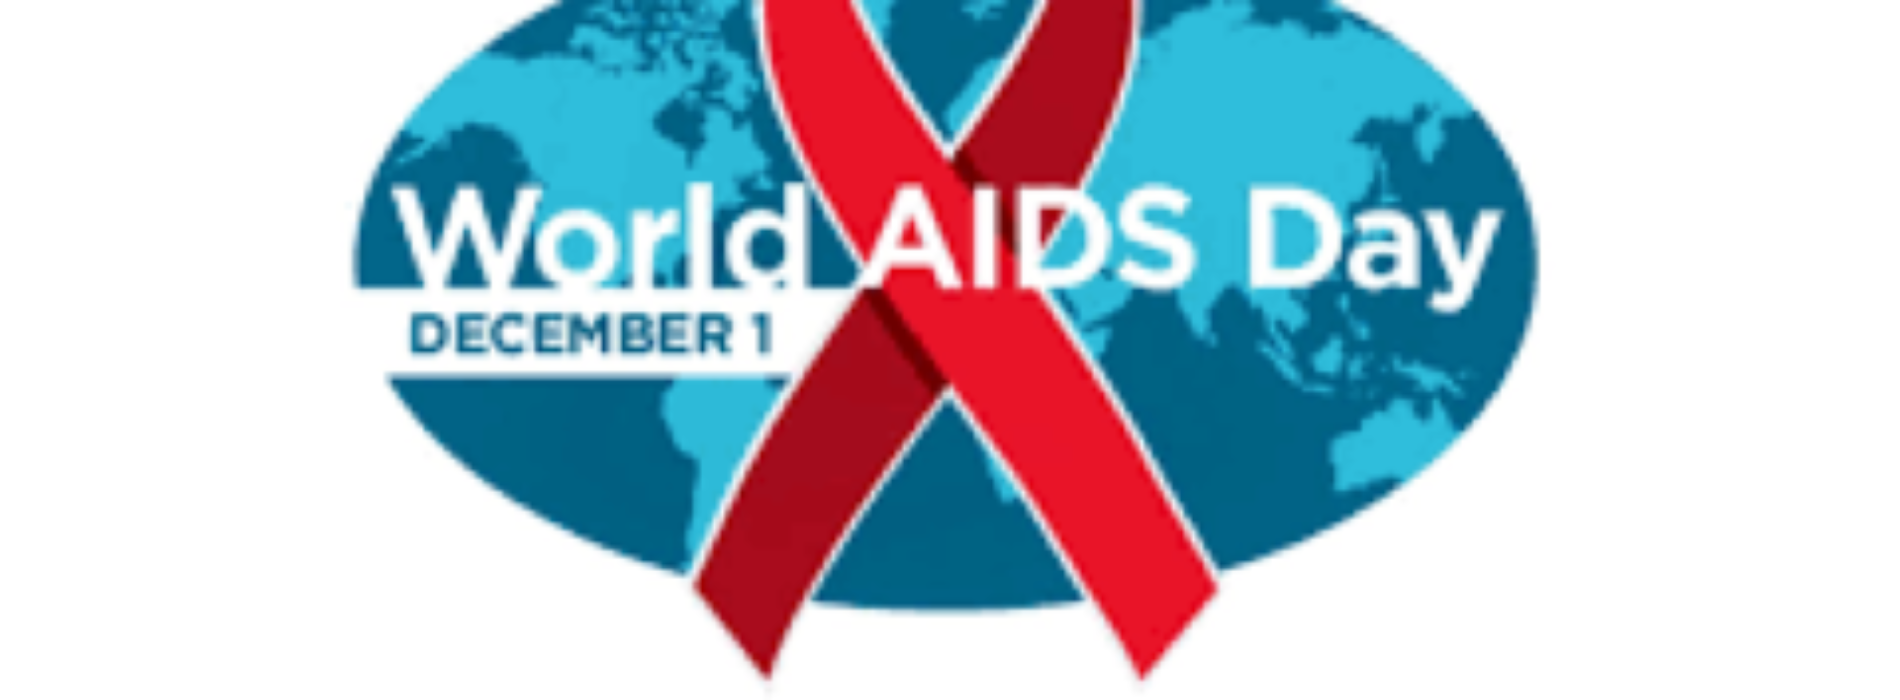 Prolonged COVID-19 pandemic deepening HIV epidemic inequalities, UNICEF warns, ahead of World AIDS Day  